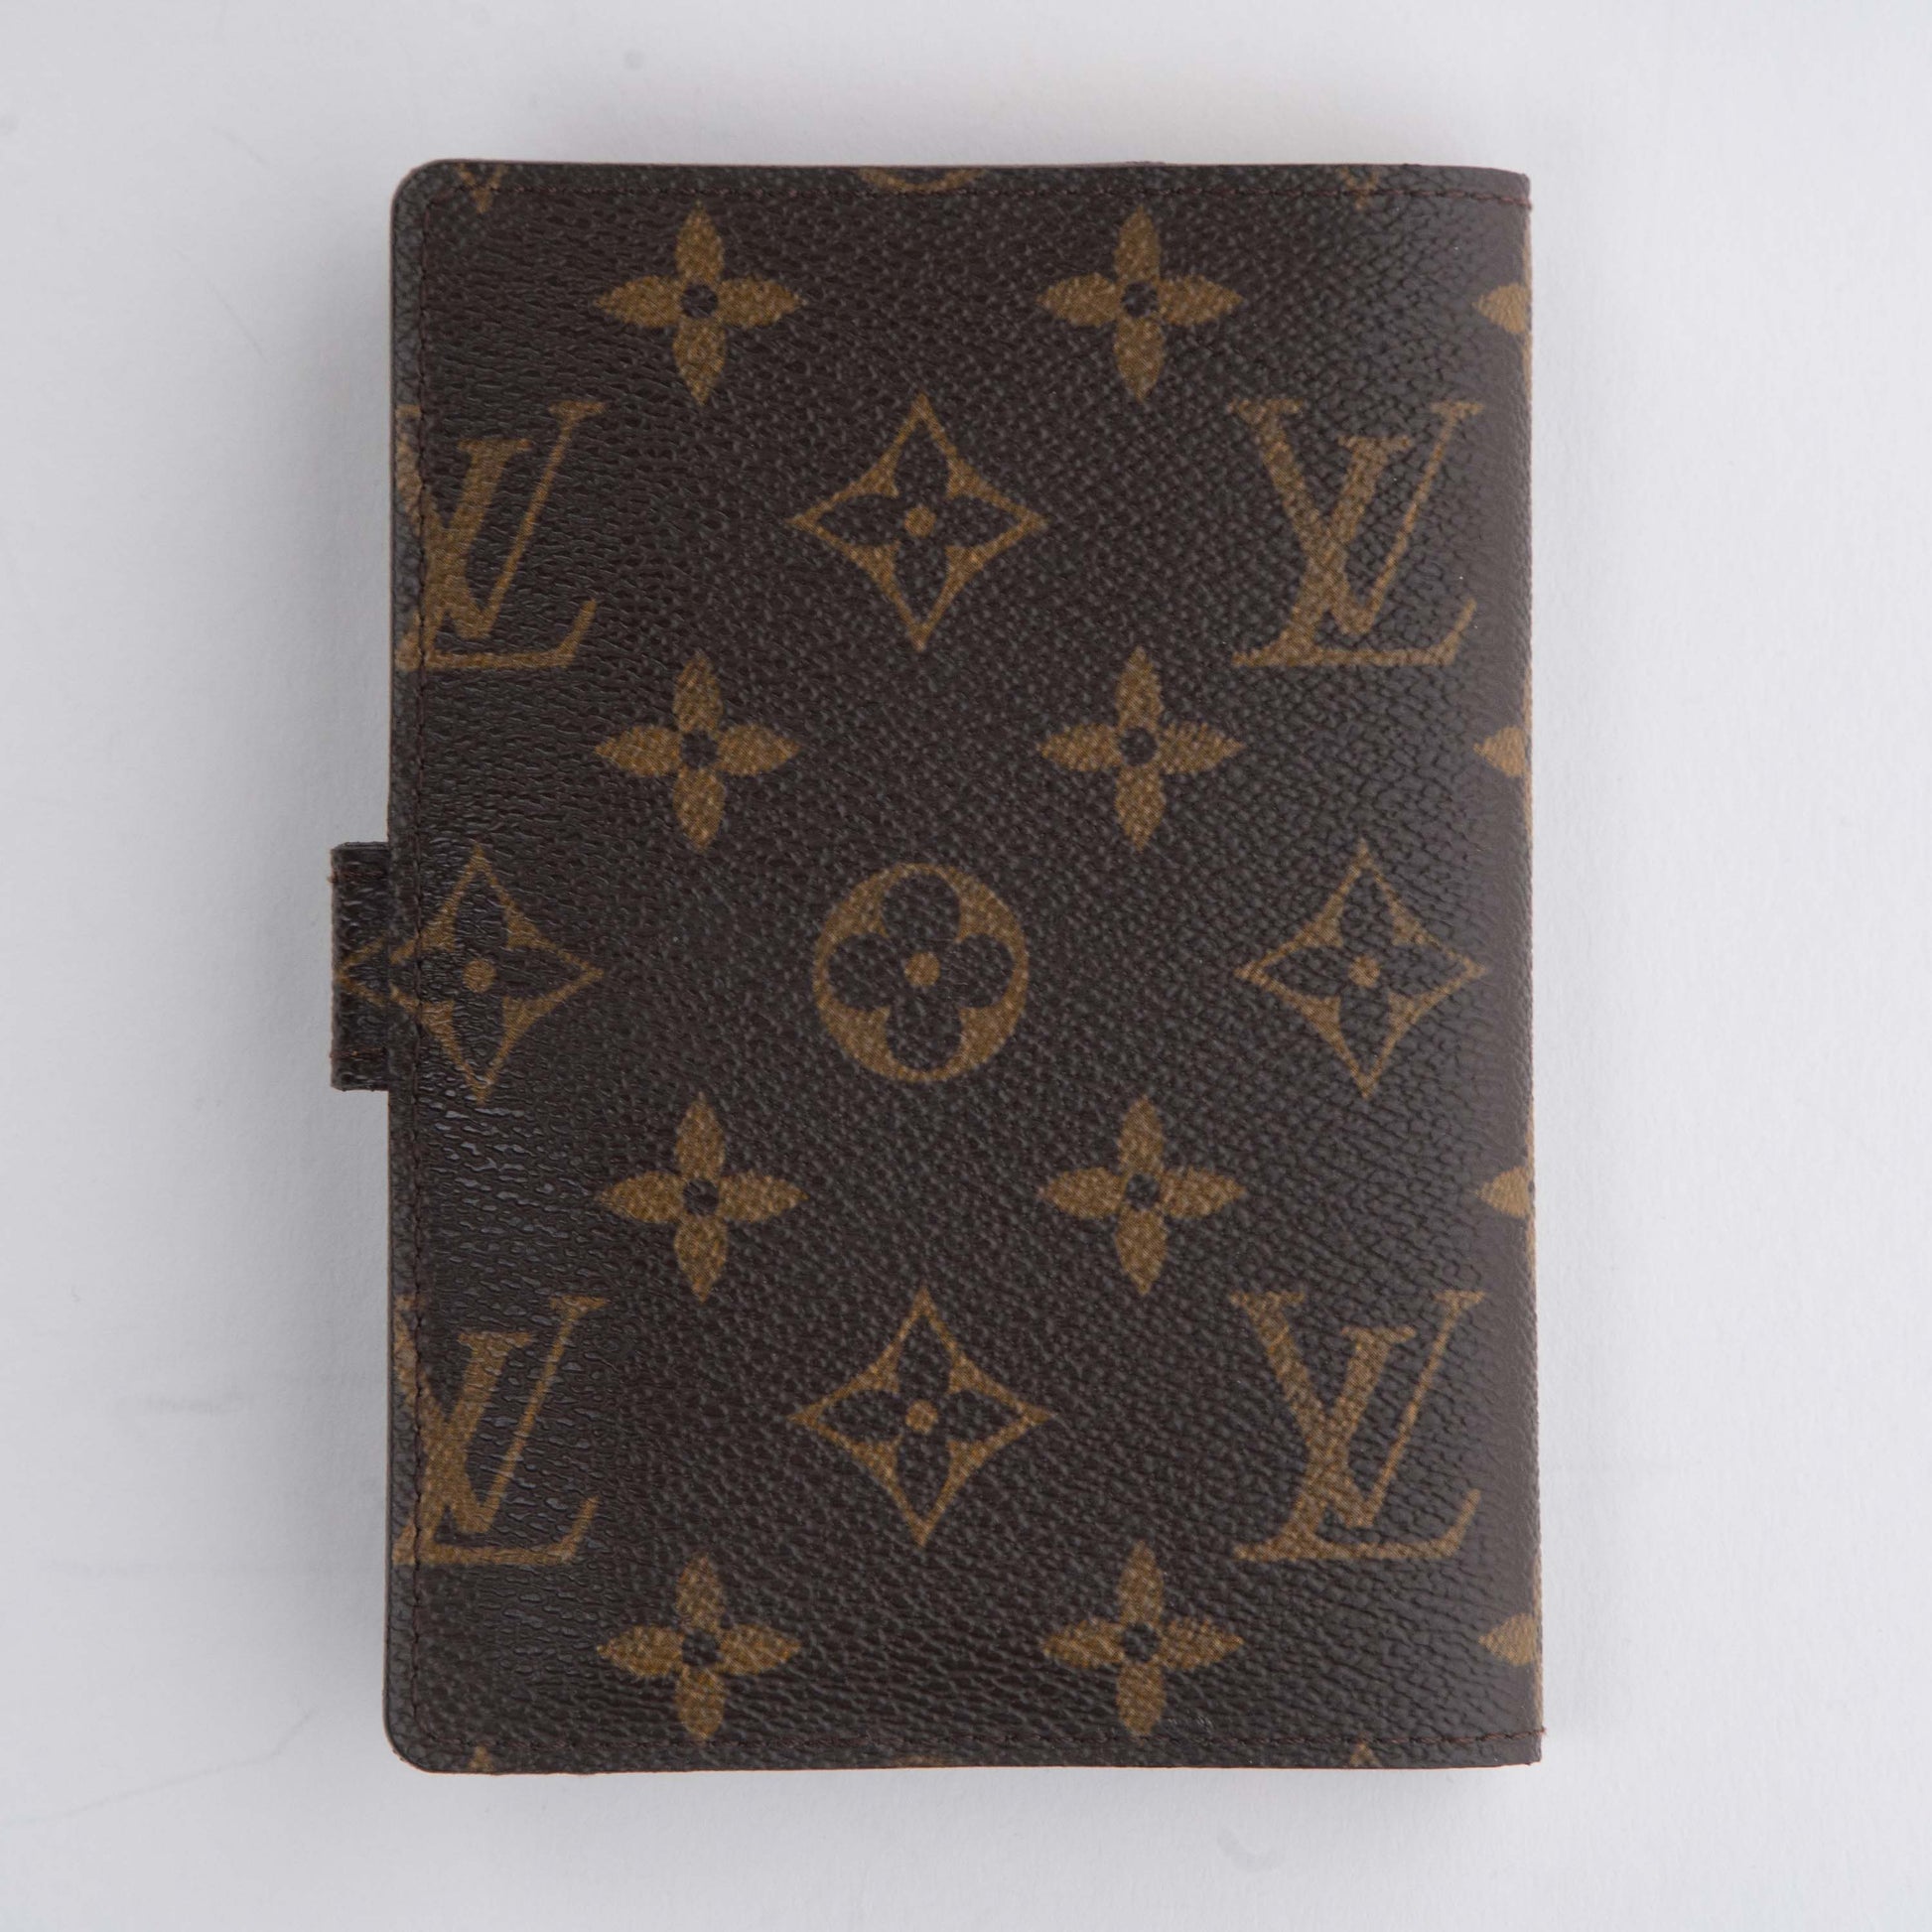 Louis Vuitton Notebook Cover Monogram Canvas